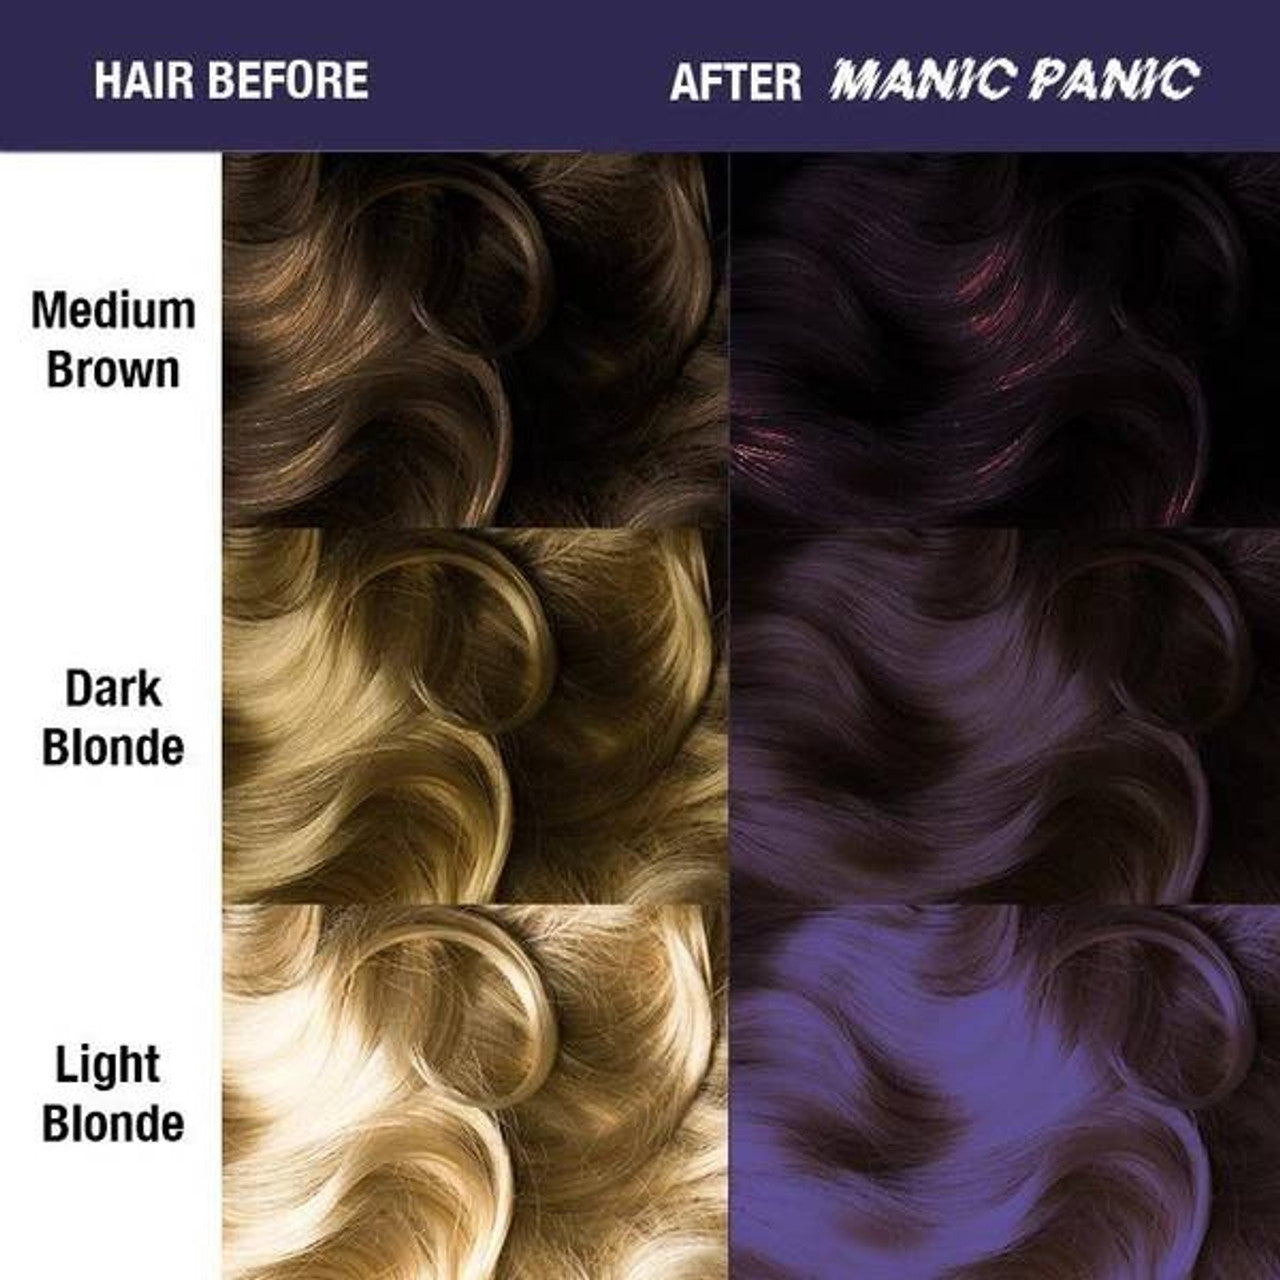 Manic Panic CLASSIC Formula - Violet Night - Kess Hair and Beauty